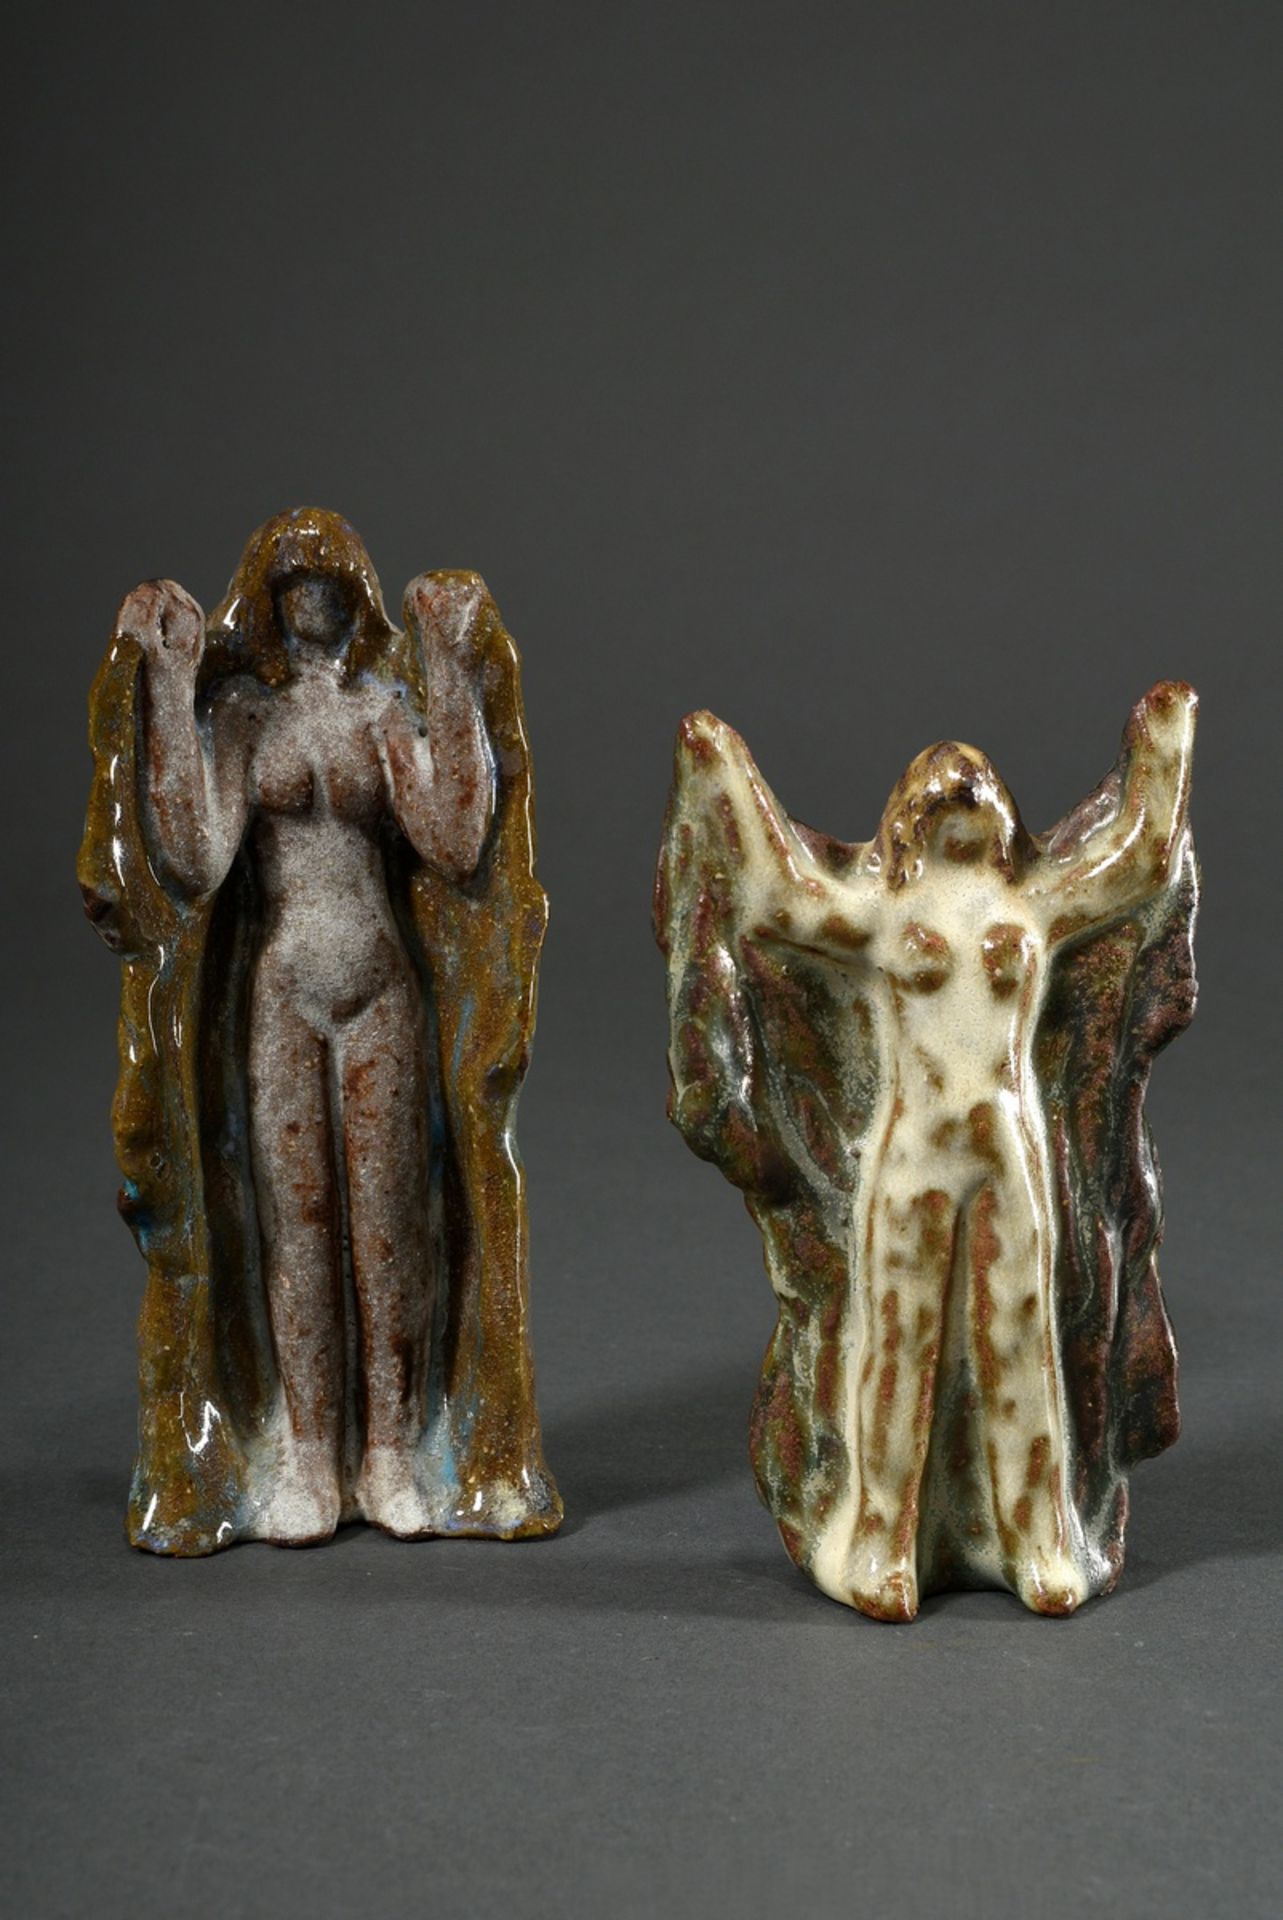 3 Various Maetzel, Monika (1917-2010) figures "Female nude with cloth", ceramic light glazed, 2x in - Image 2 of 7